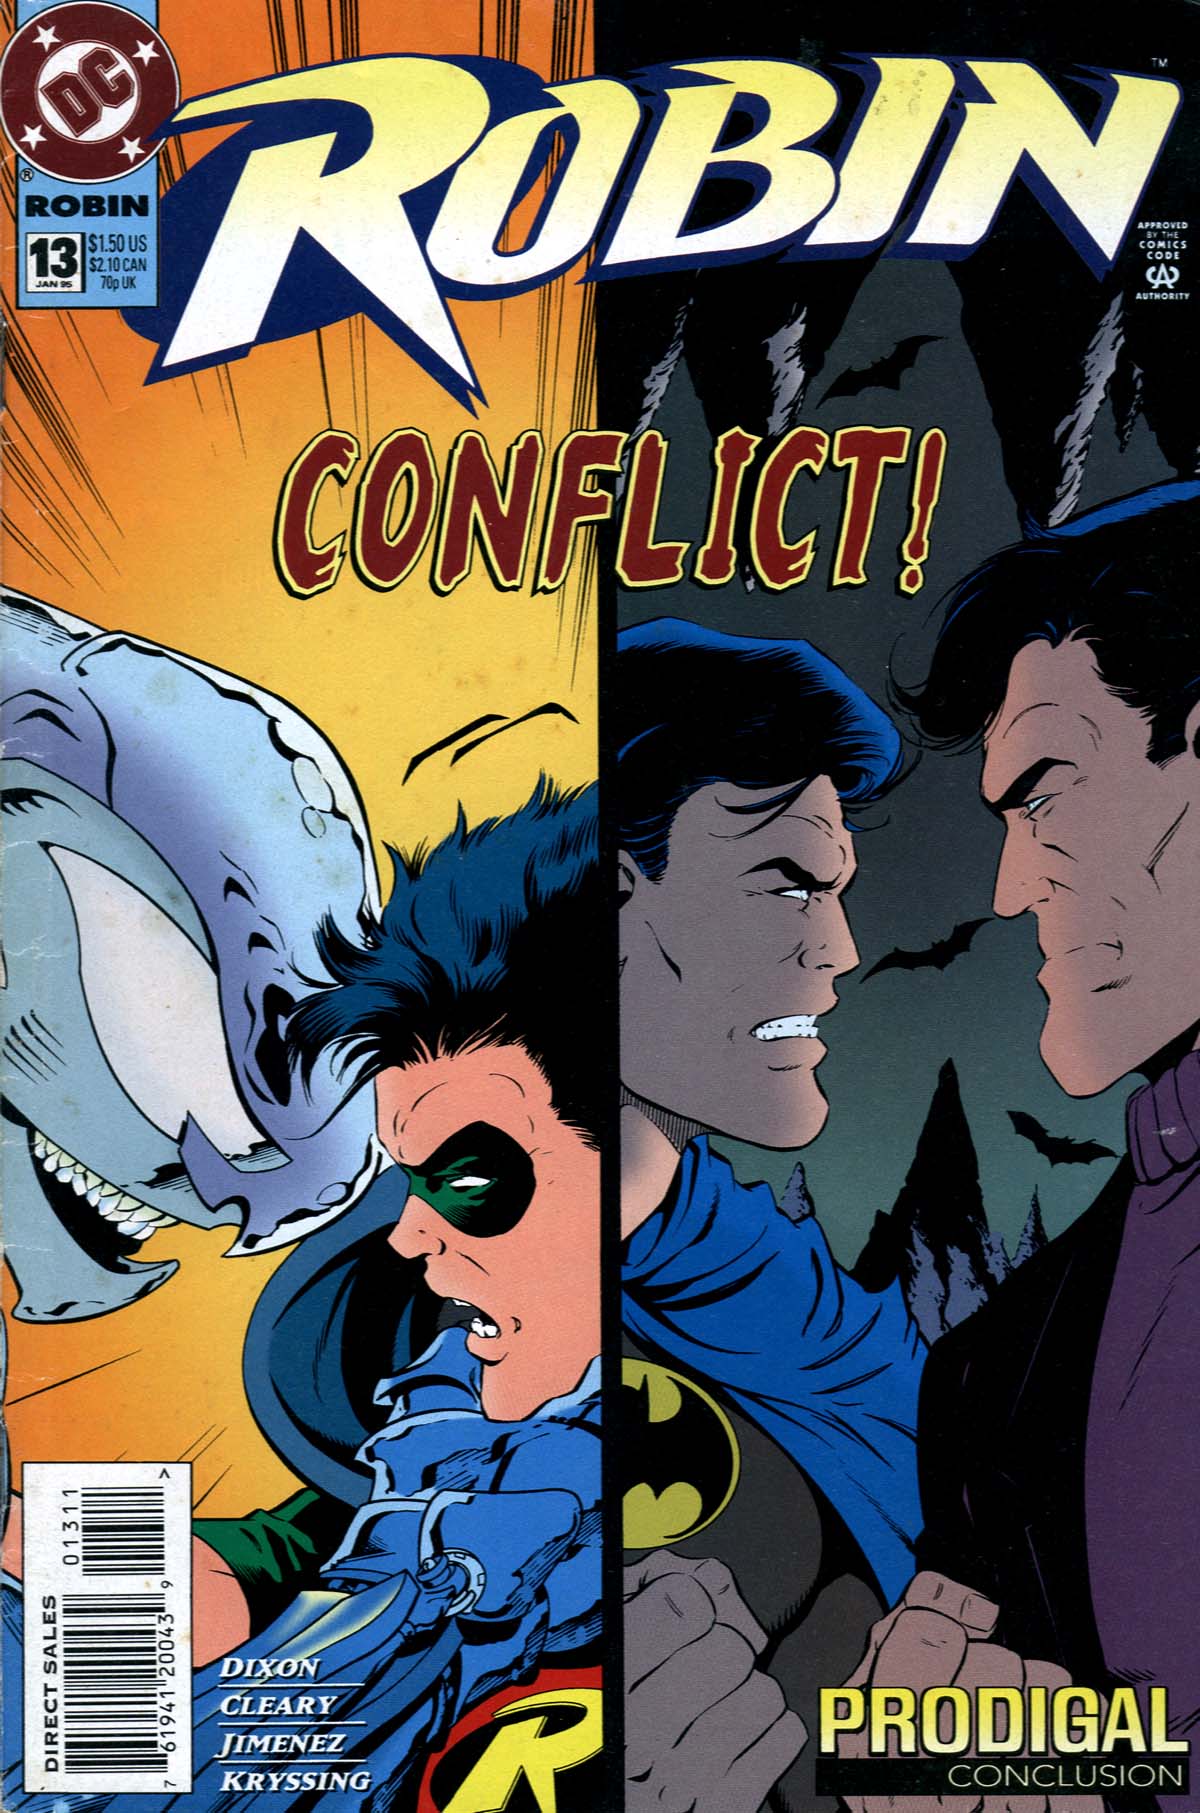 Batman Knightfall Prodigal Issue 12 | Read Batman Knightfall Prodigal Issue  12 comic online in high quality. Read Full Comic online for free - Read  comics online in high quality .| READ COMIC ONLINE